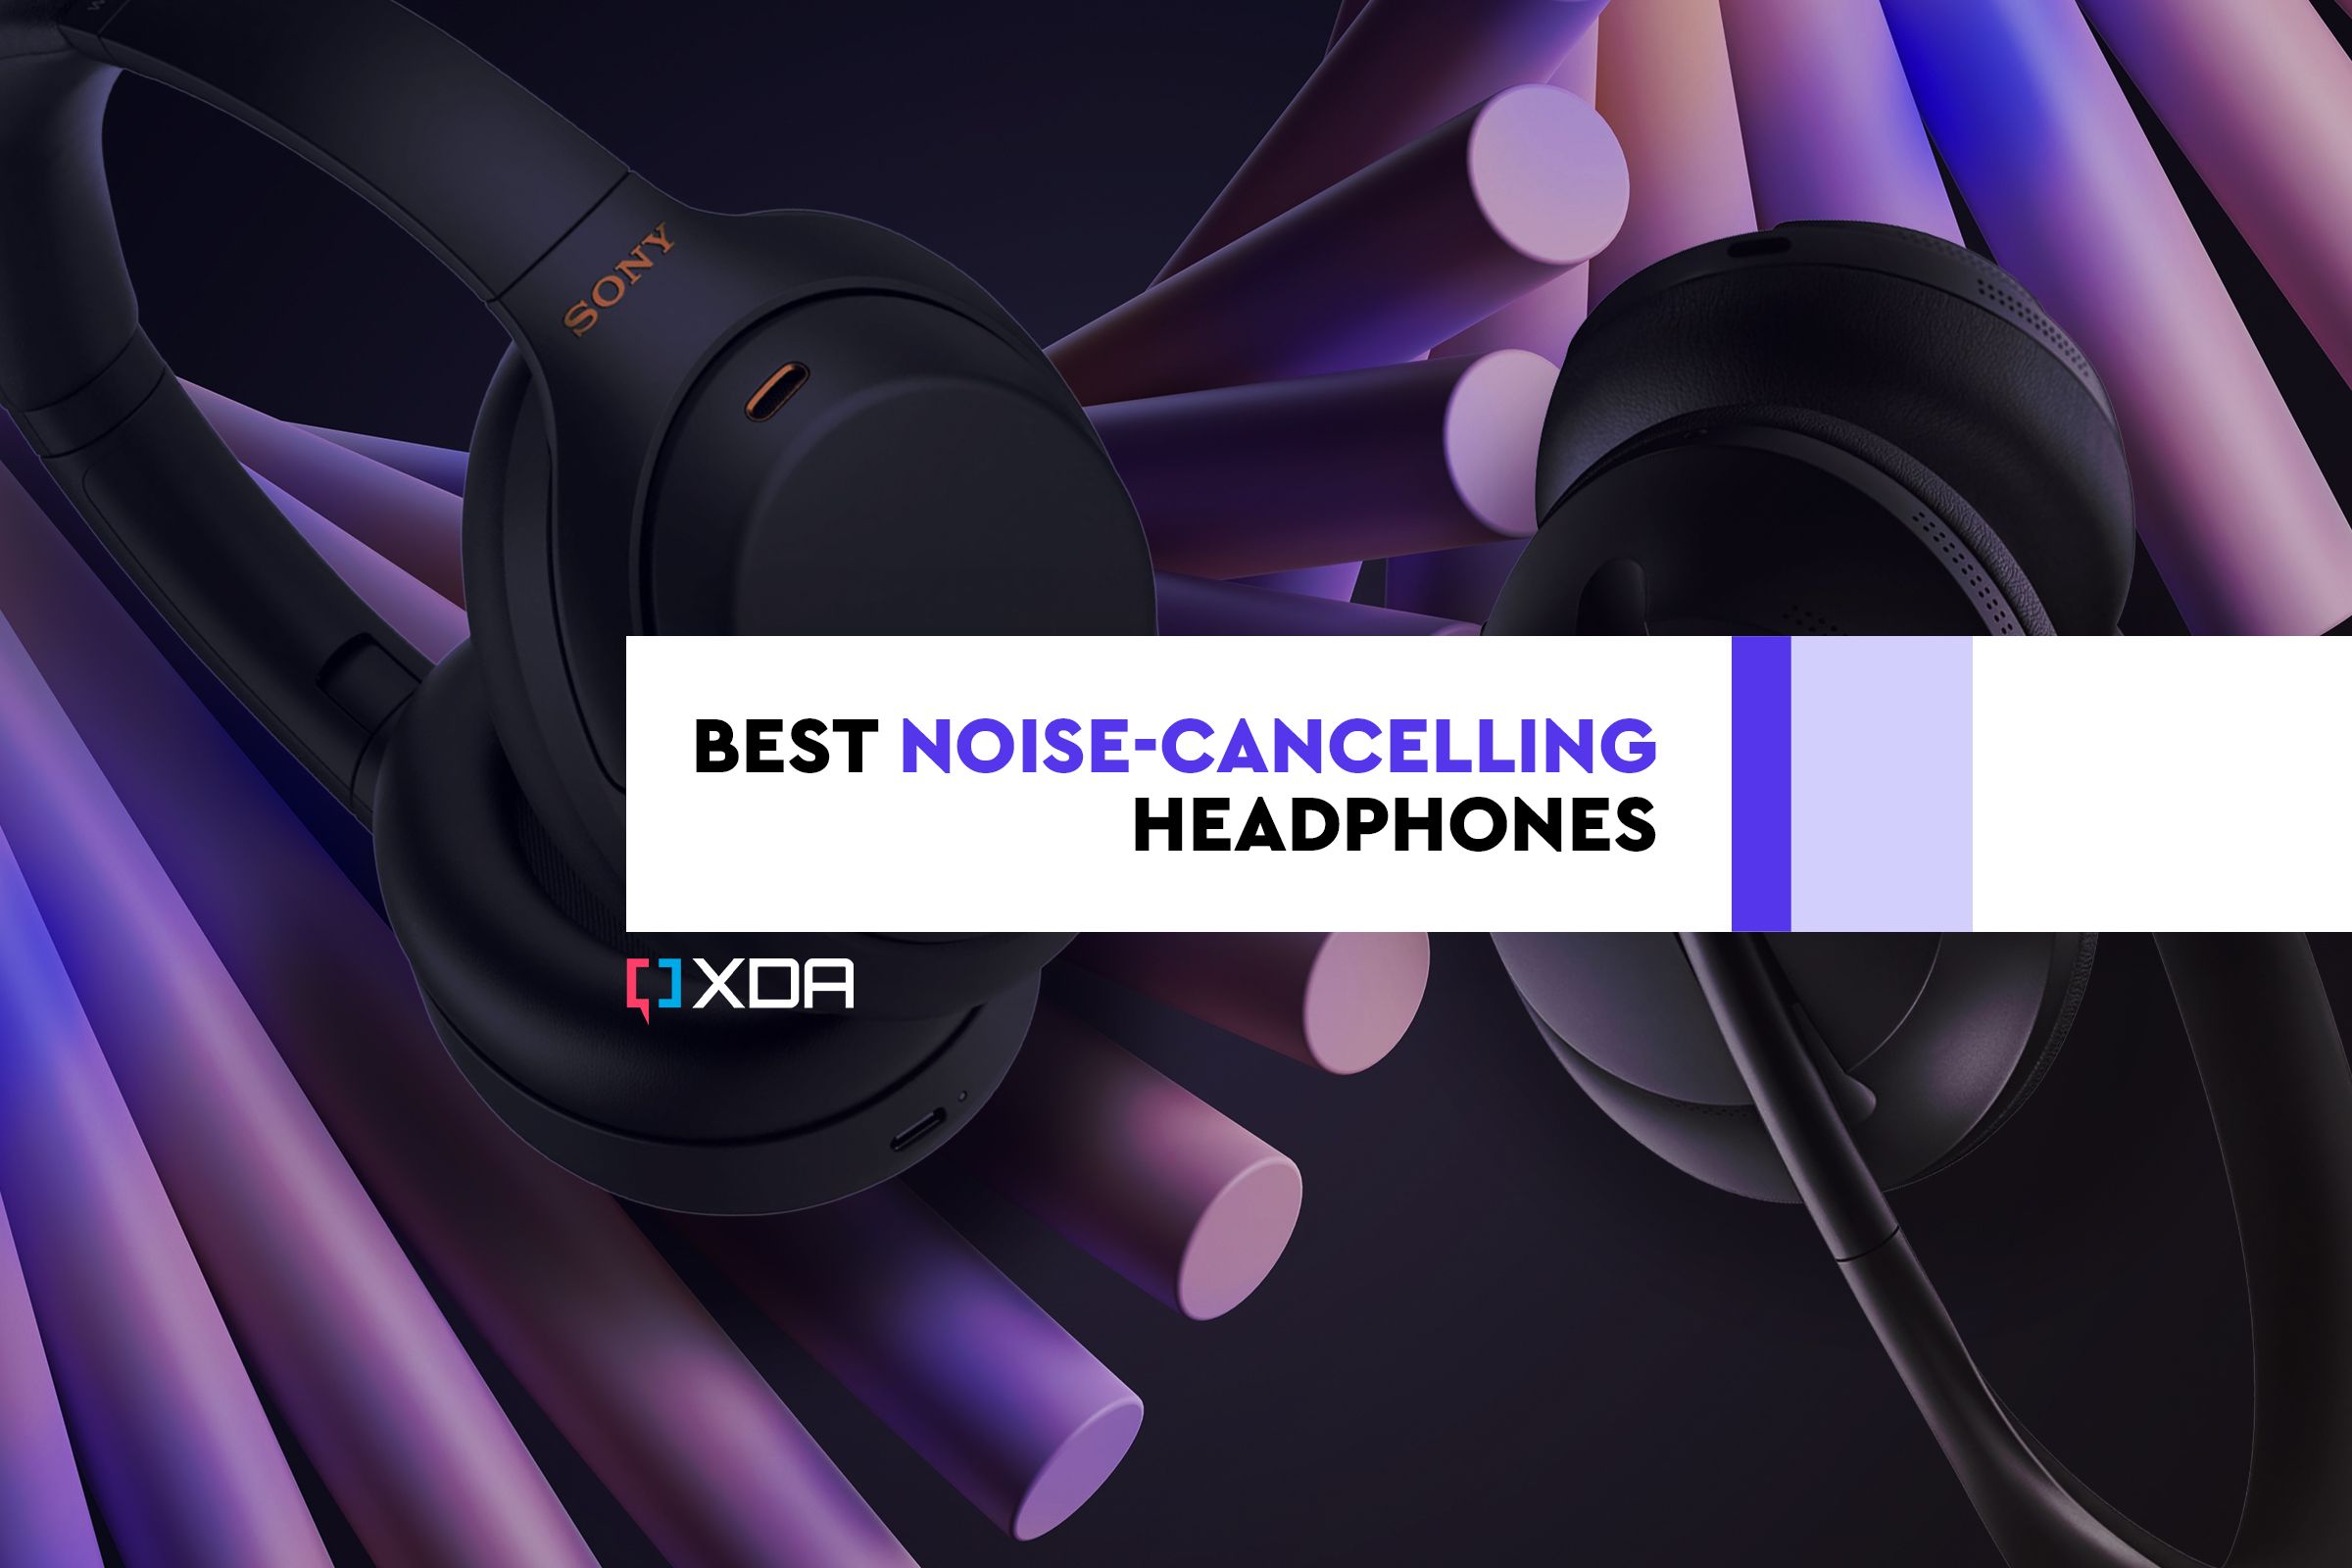 Best noise-cancelling headphones